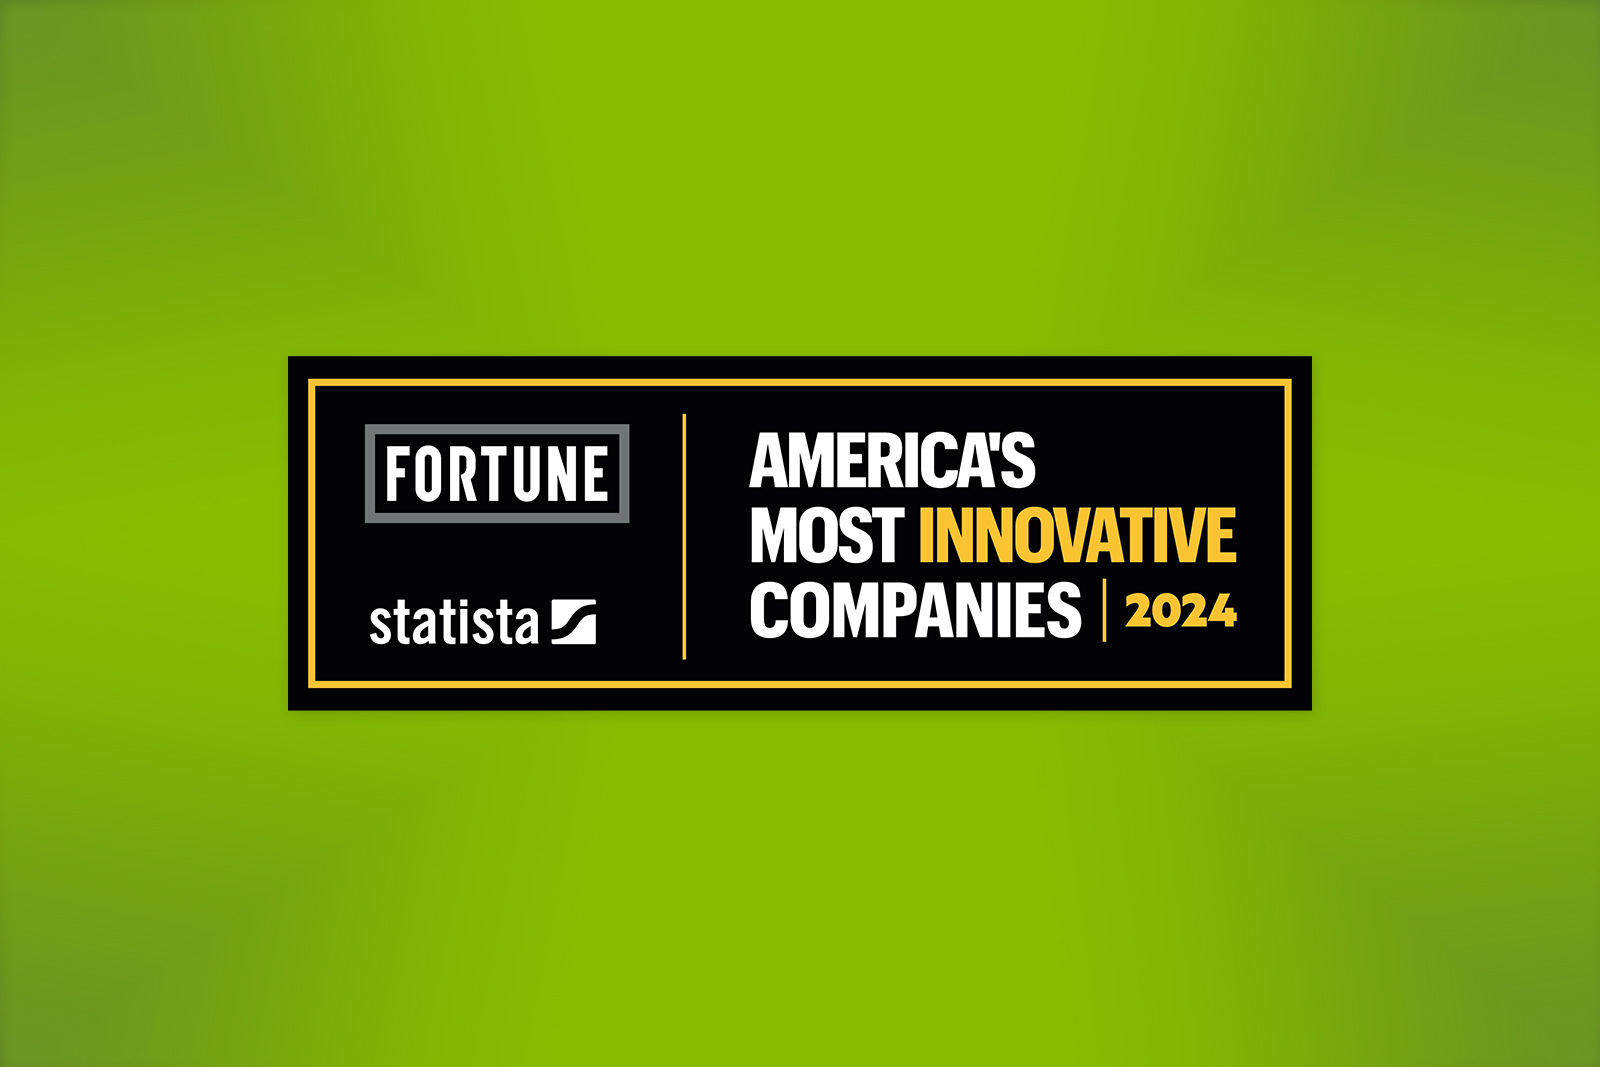 Americas Most Innovative Companies Award logo